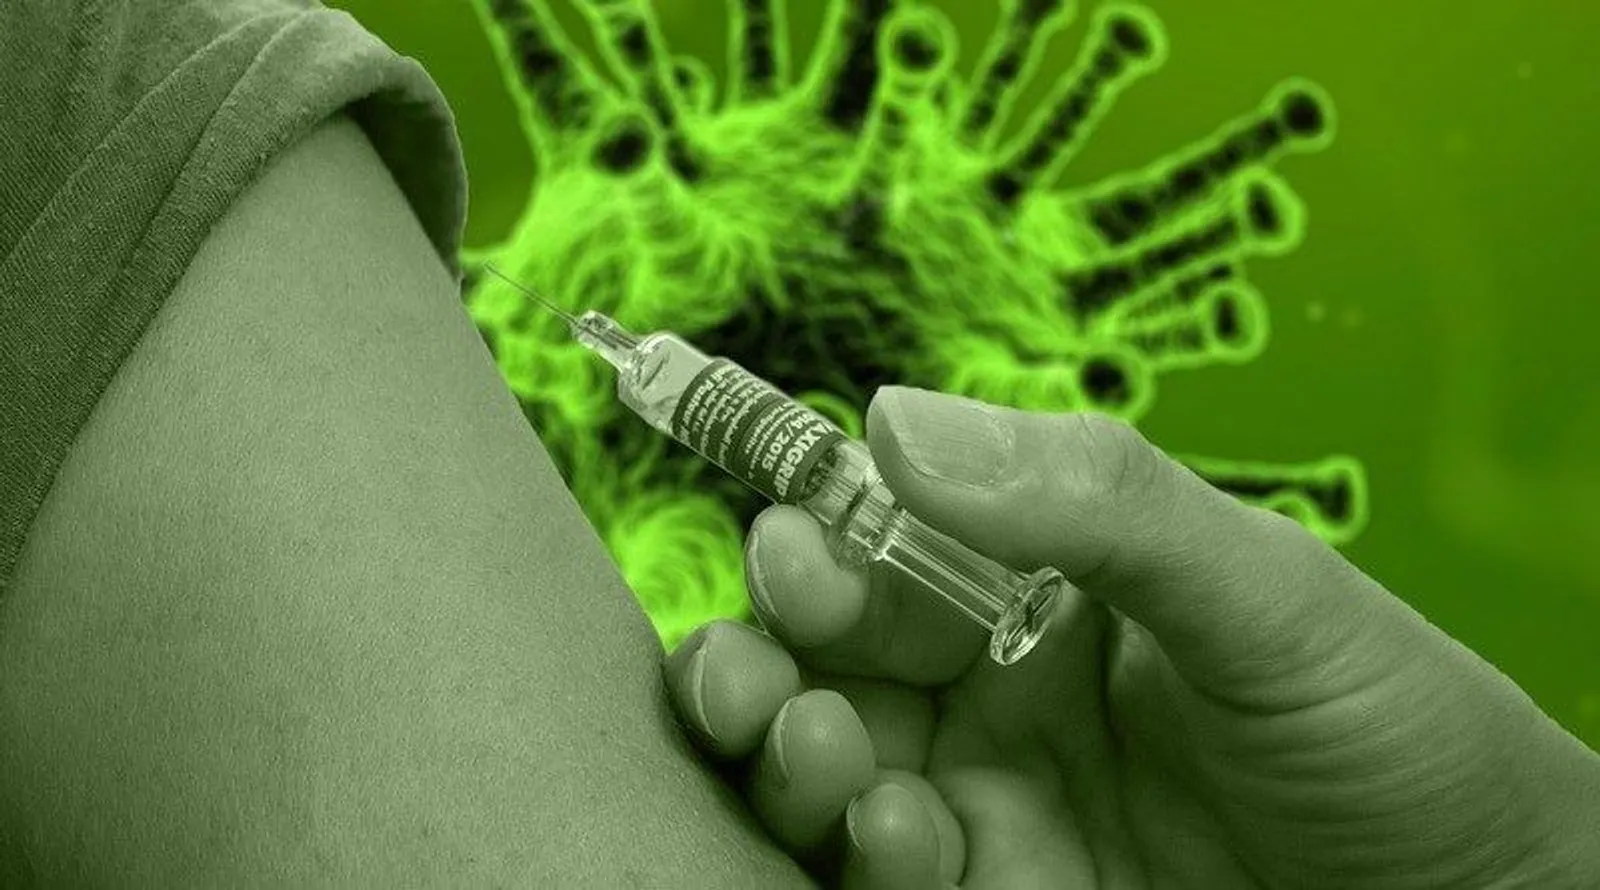 Catat! Inilah 5 Mitos Vaksin yang Perlu Kamu Ketahui